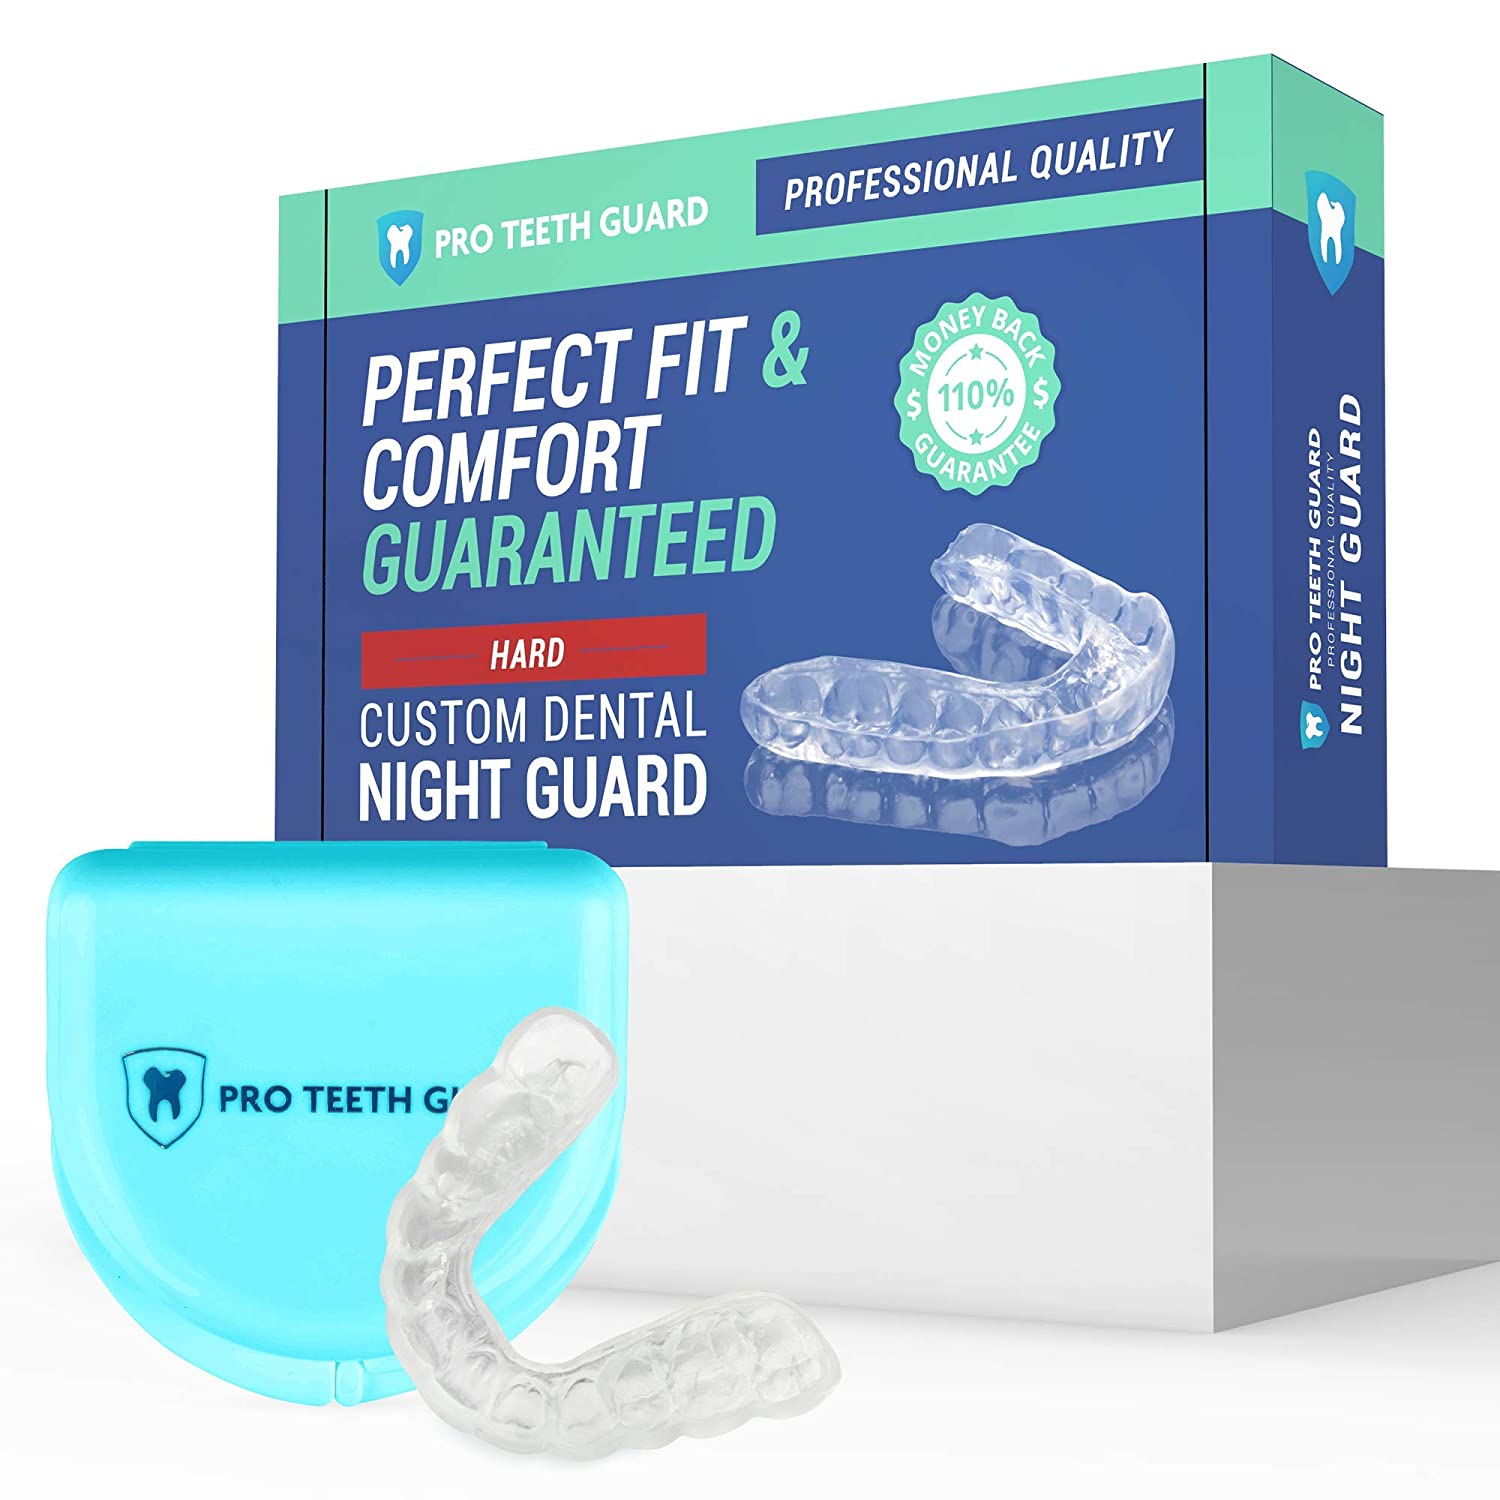 Pro Teeth Guard Professional Dental Night Guard